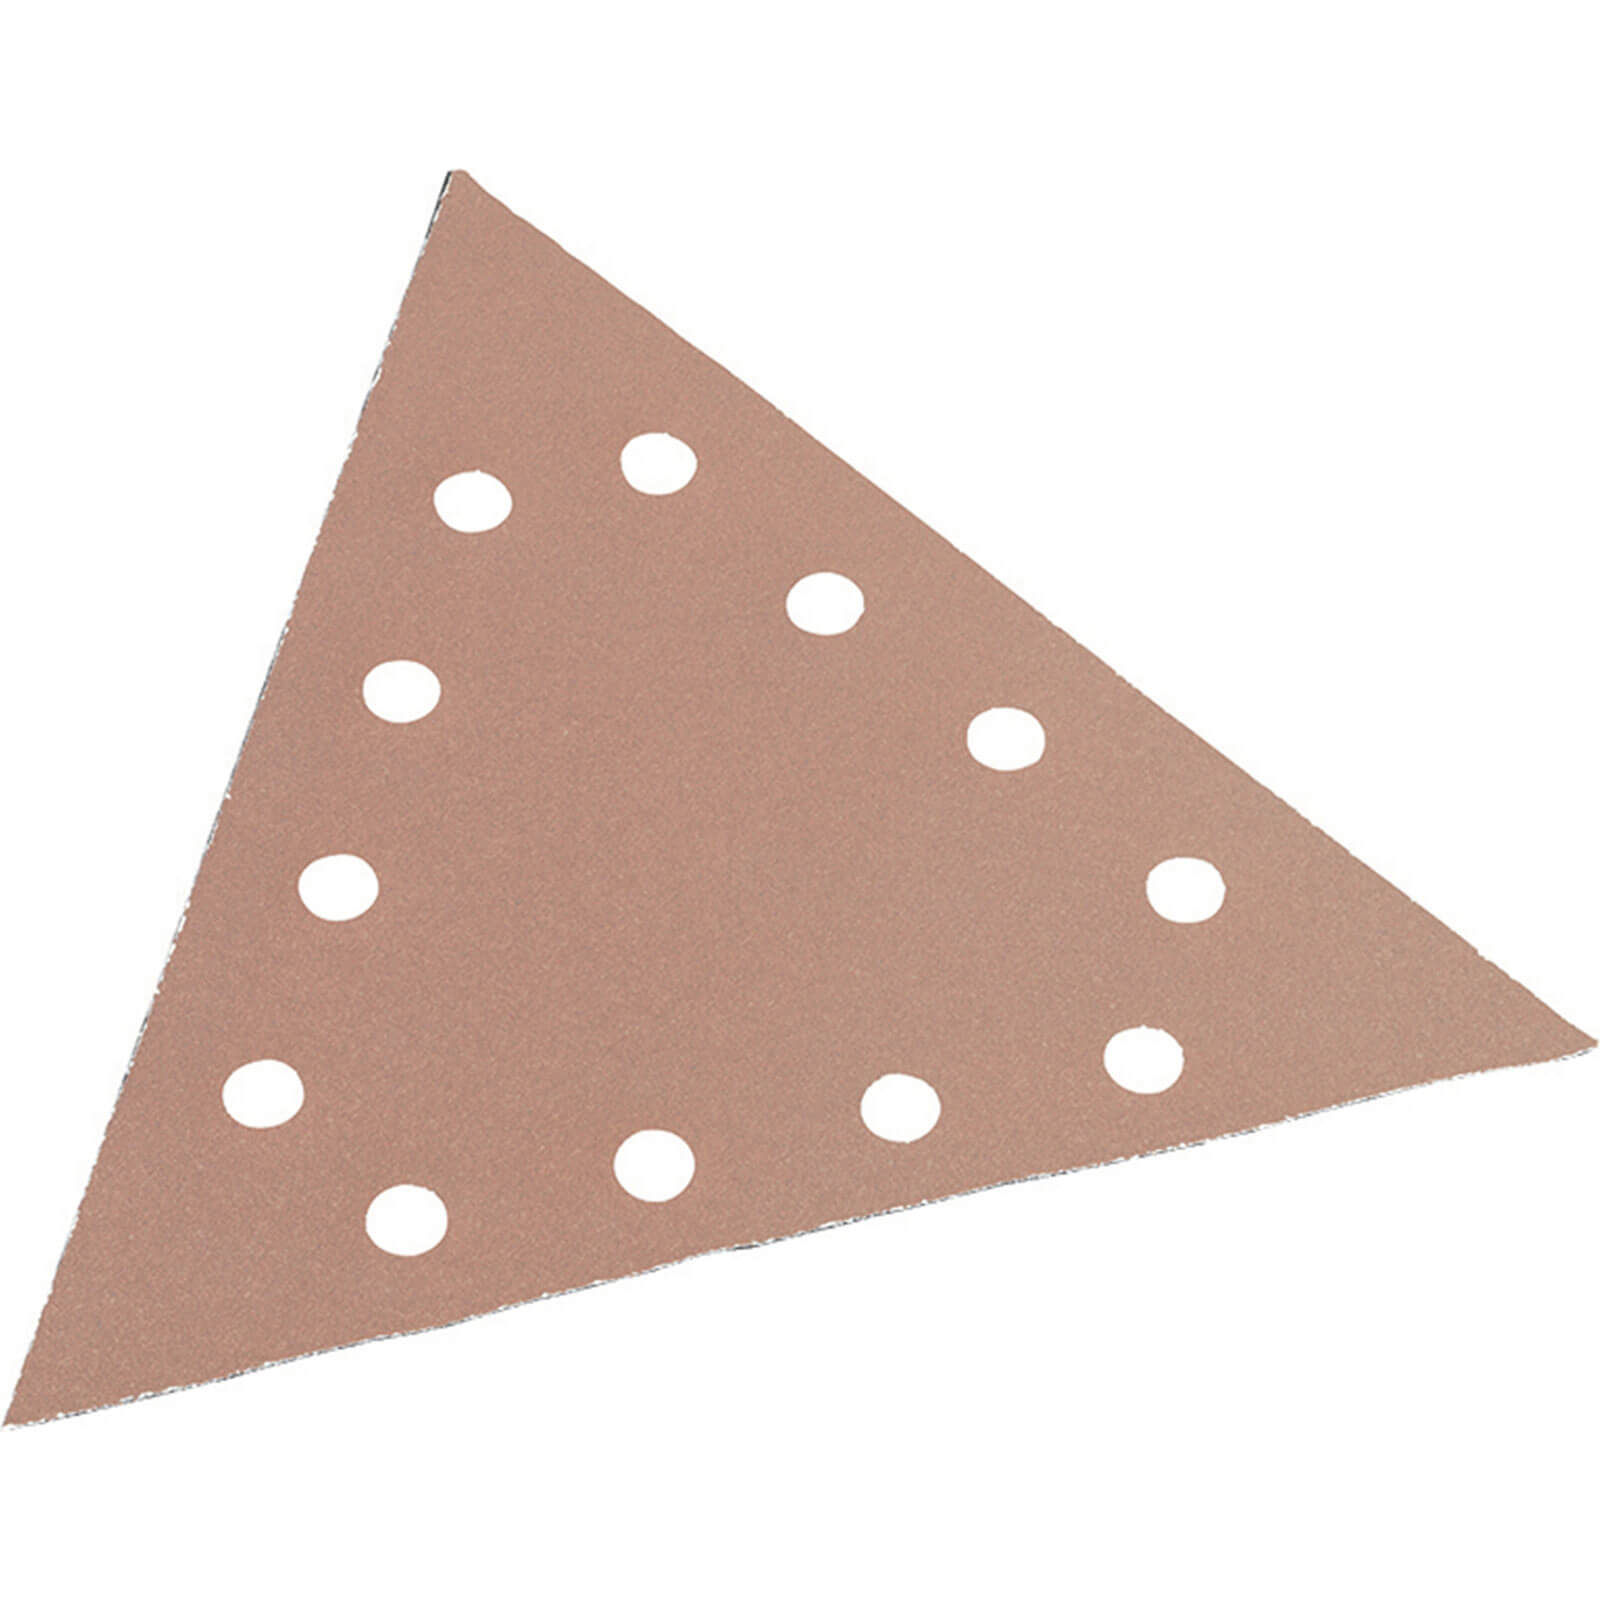 Image of Flex Triangular Sanding Sheets for WSE 7 and WST 700 Giraffe Sanders 180g Pack of 25